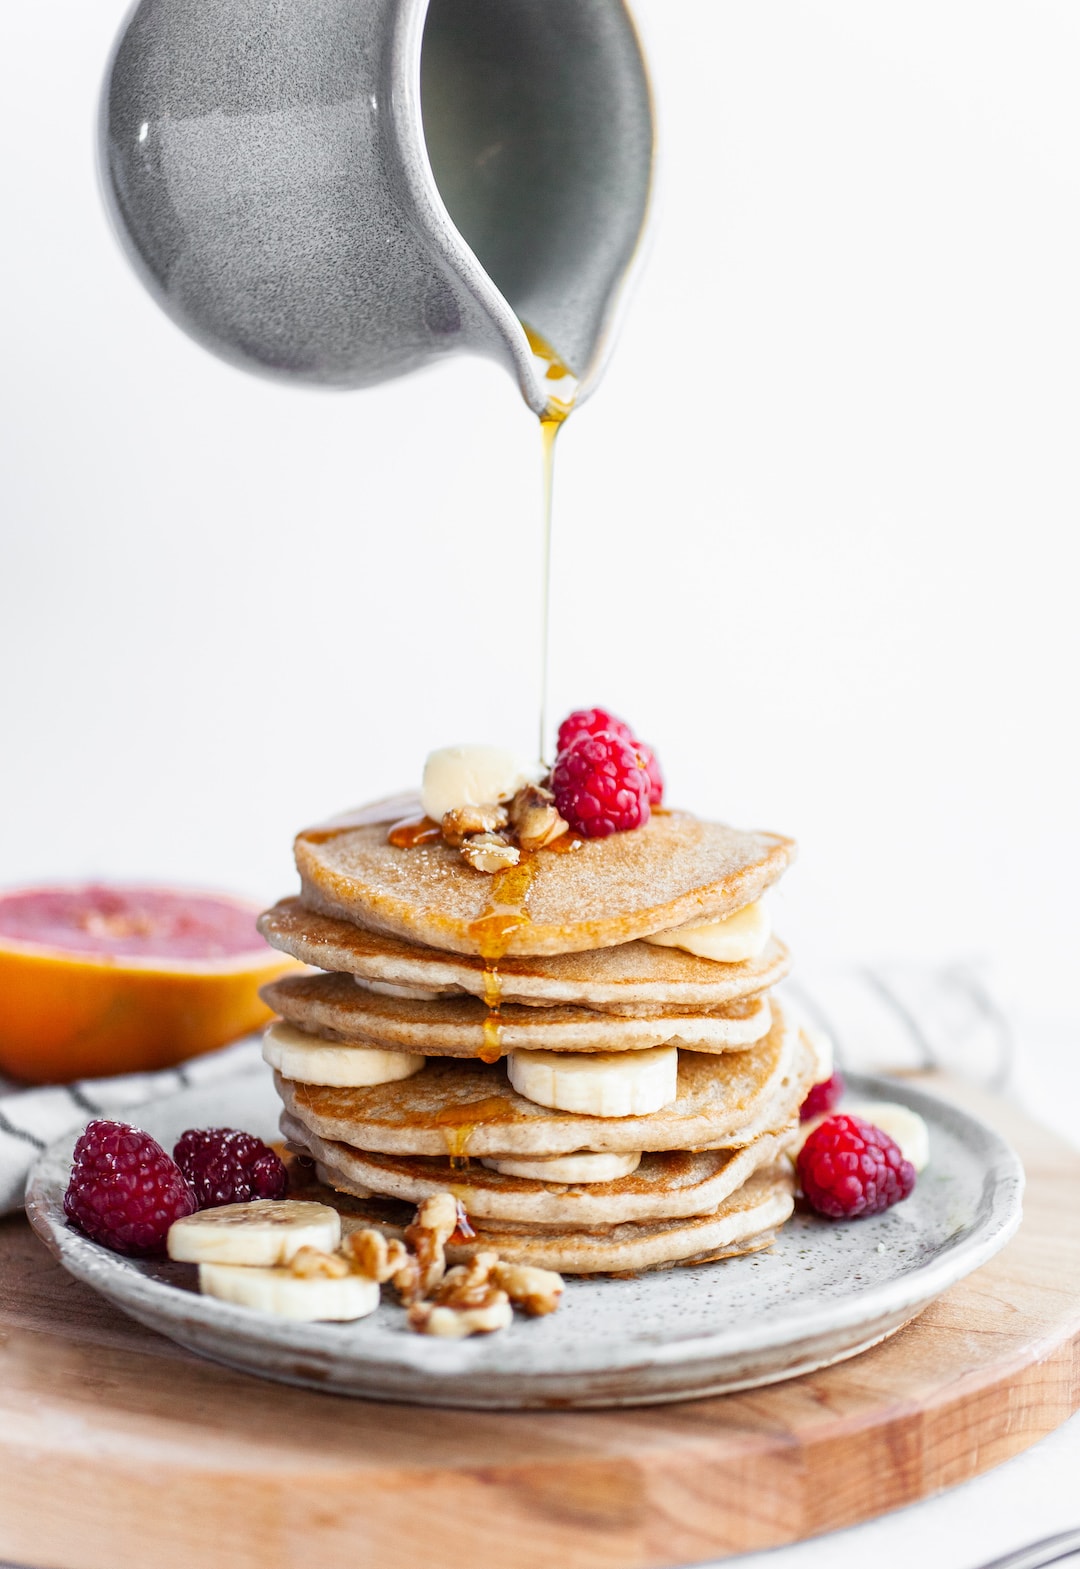 Maple syrup pouring on Perfect Vegan Buckwheat Pancakes